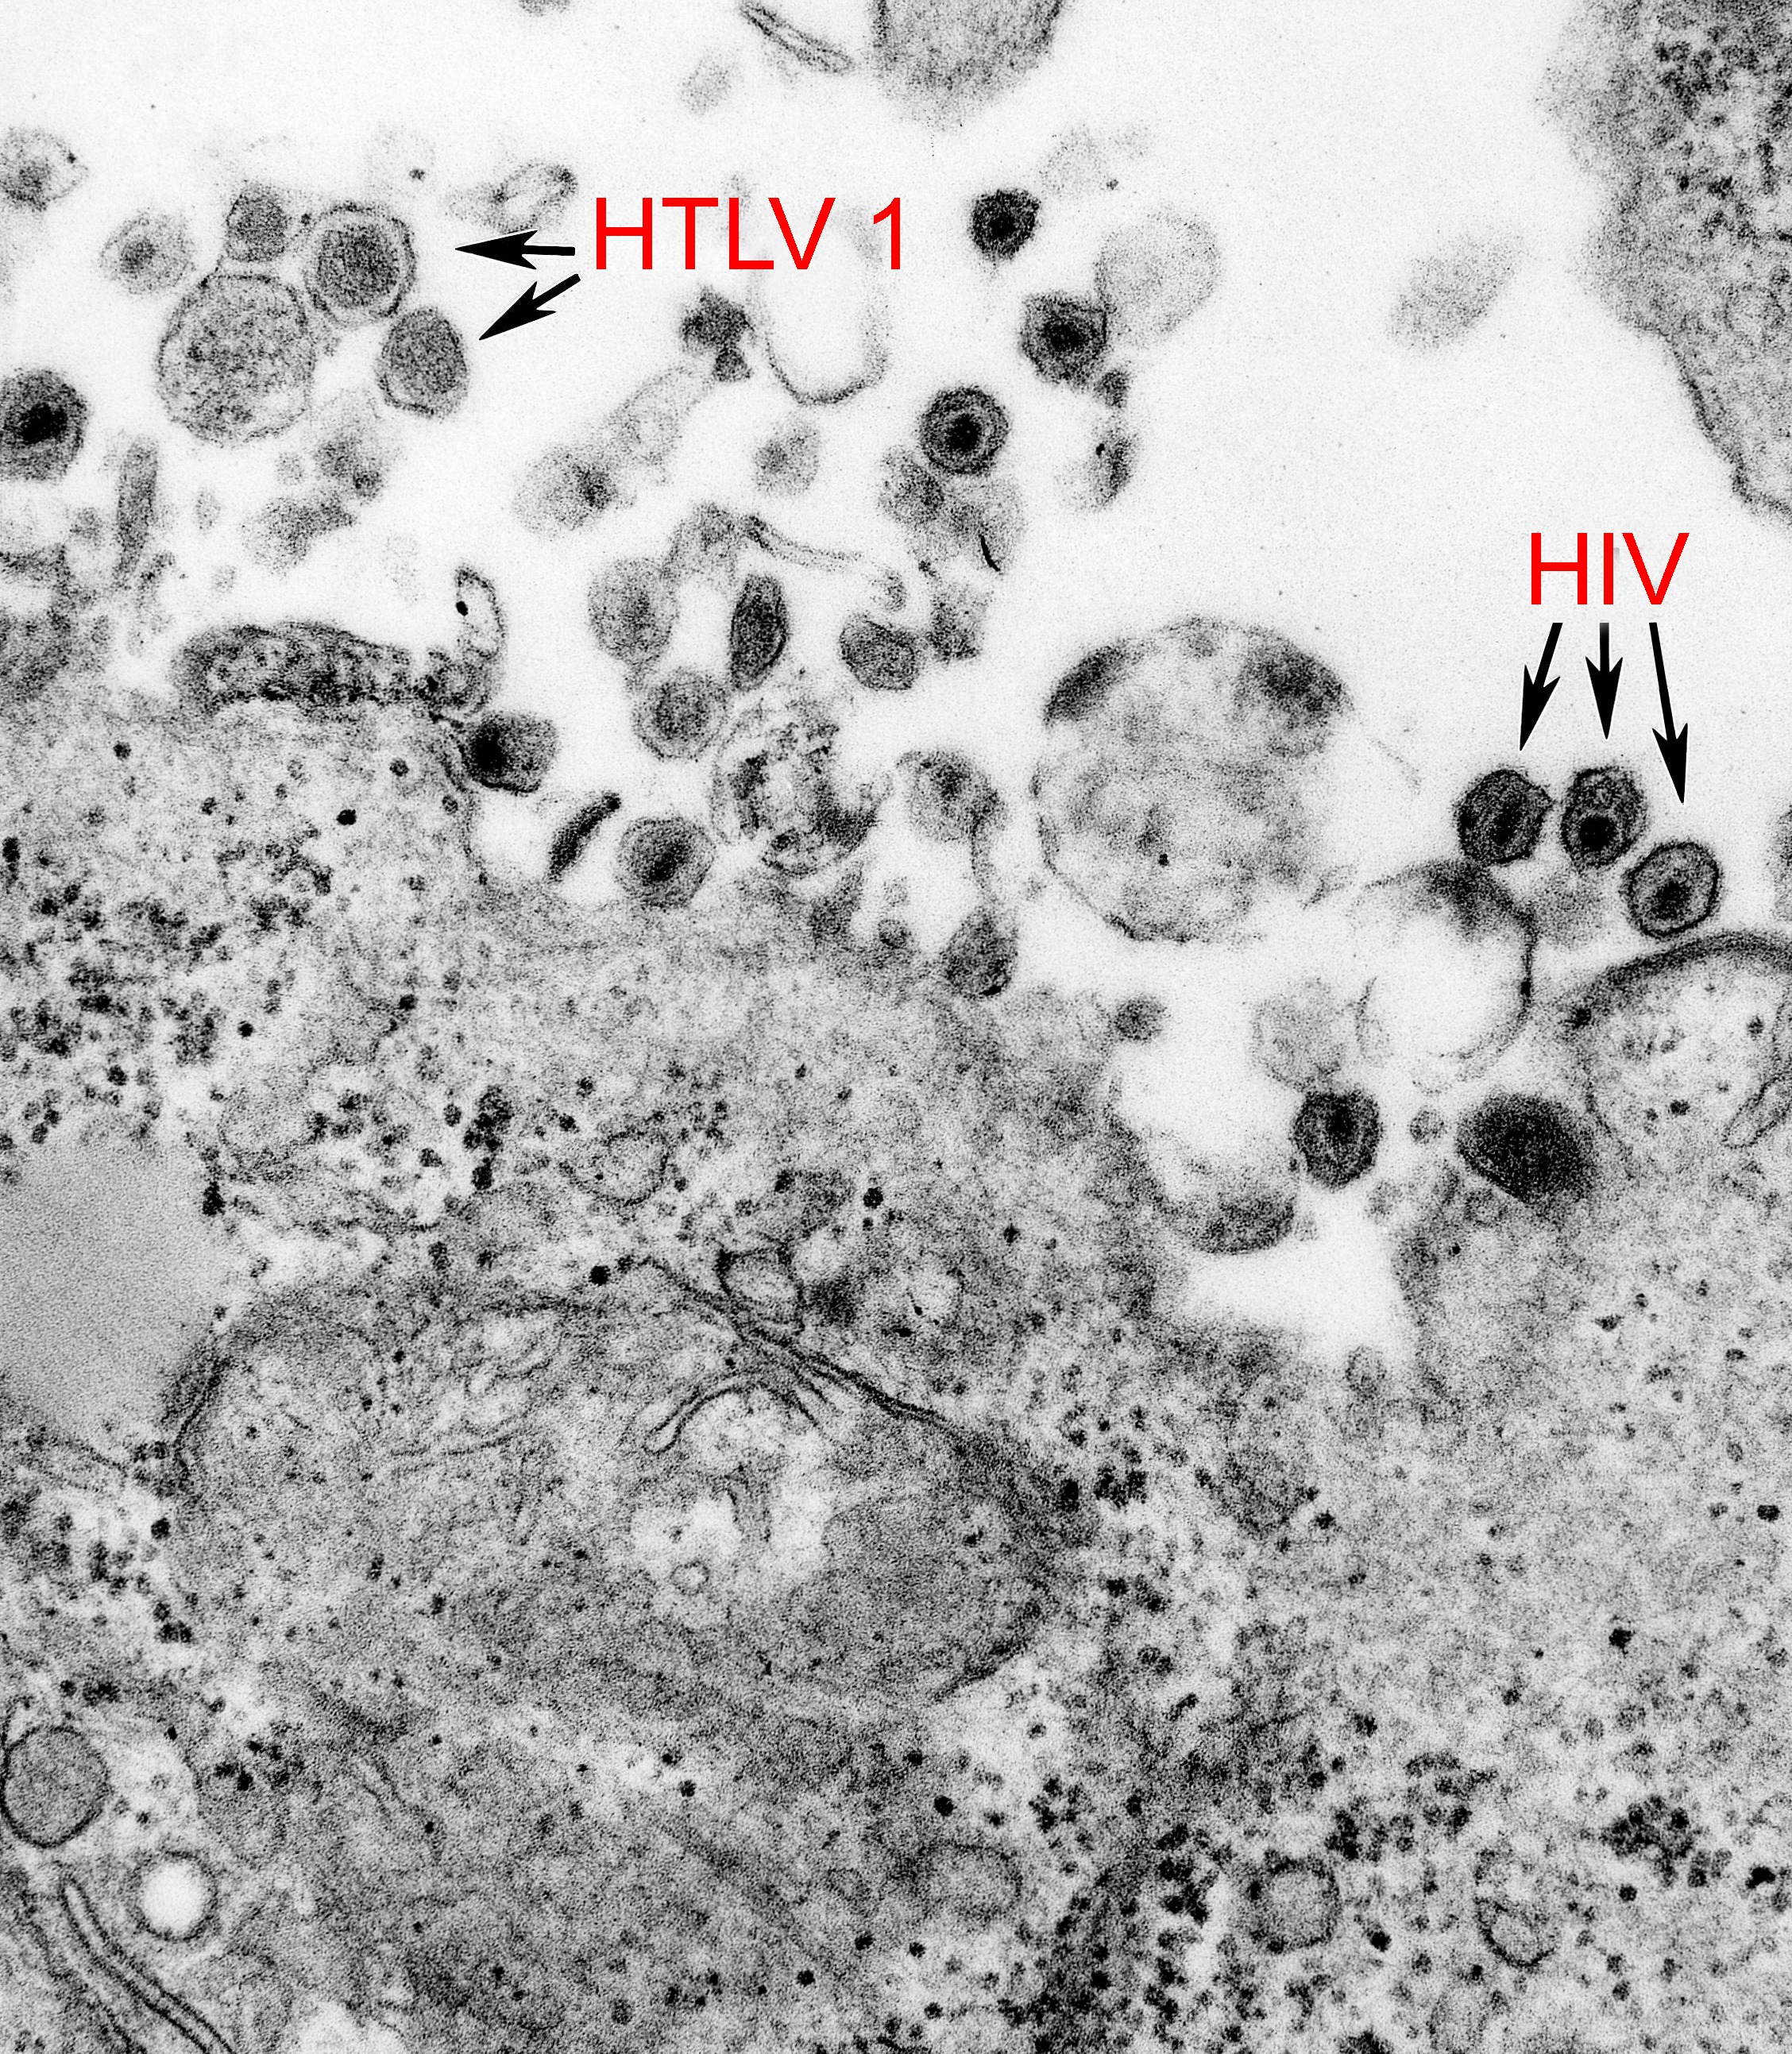 Electron Micrograph Of Htlv 1 And Hiv Biology Of Human World Of Viruses